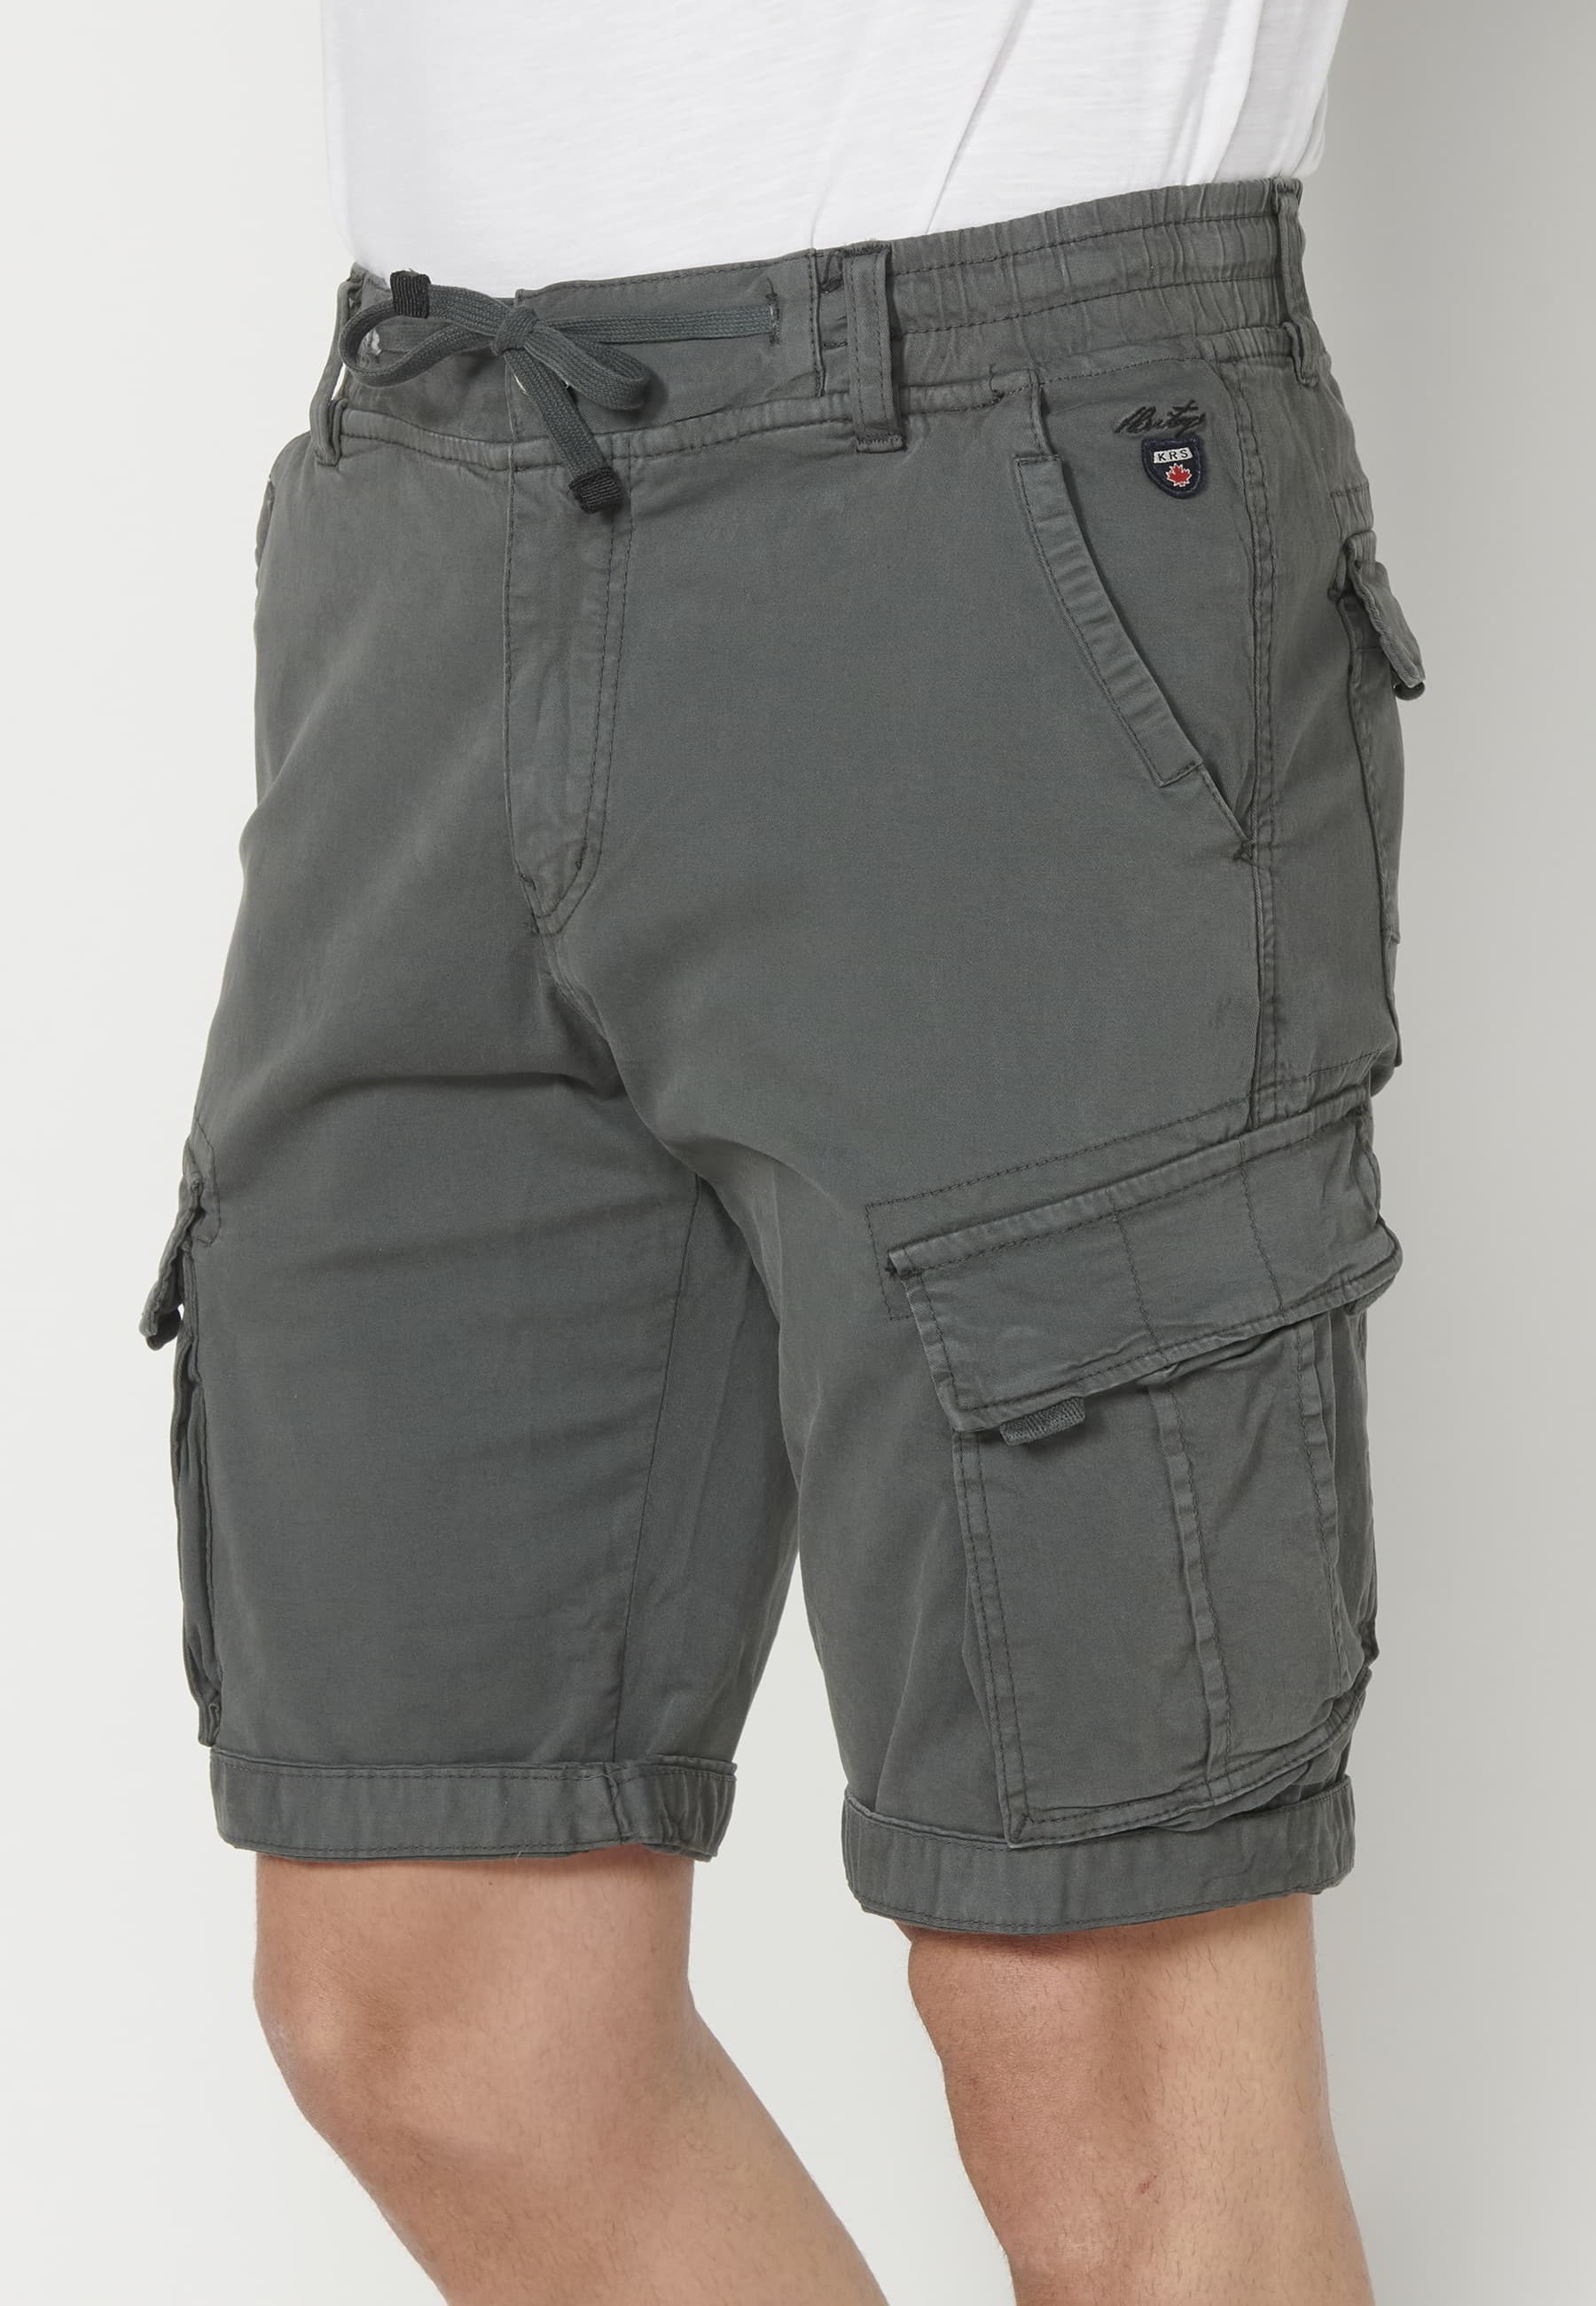 Bermuda cargo style shorts in Gray color for Men